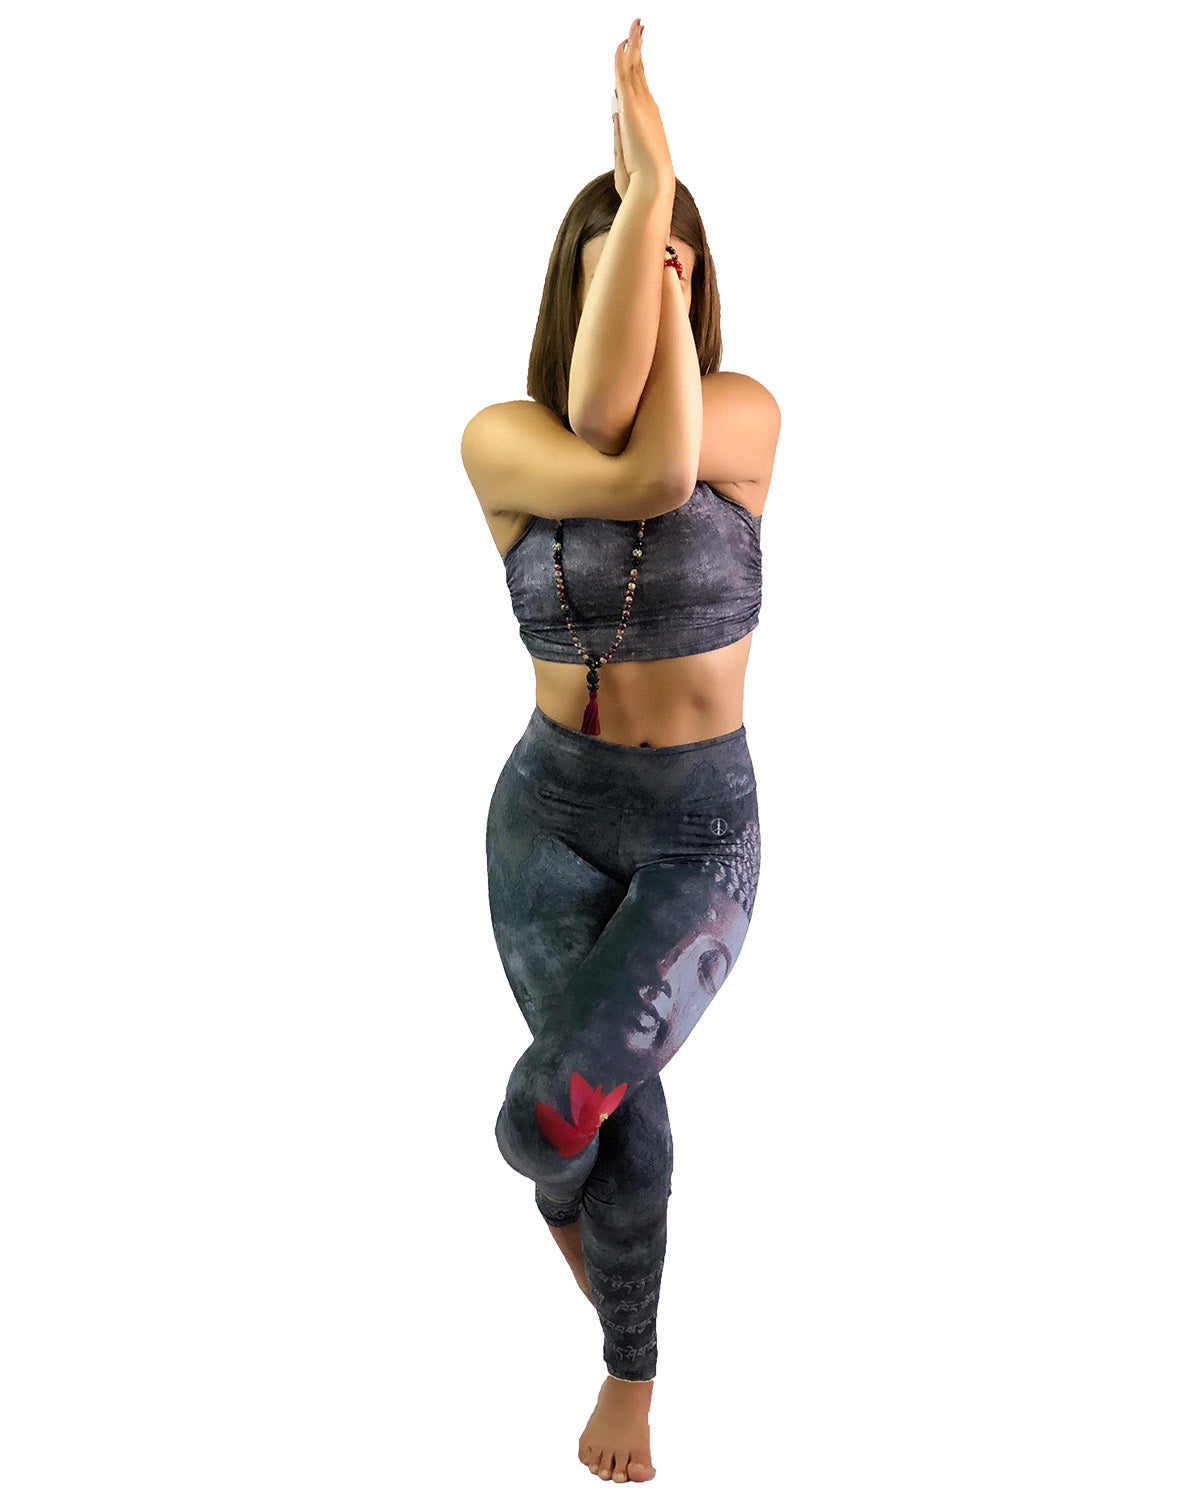 yoganastix-eco-friendly-sustainable-custom-yoga-leggings-buddha08